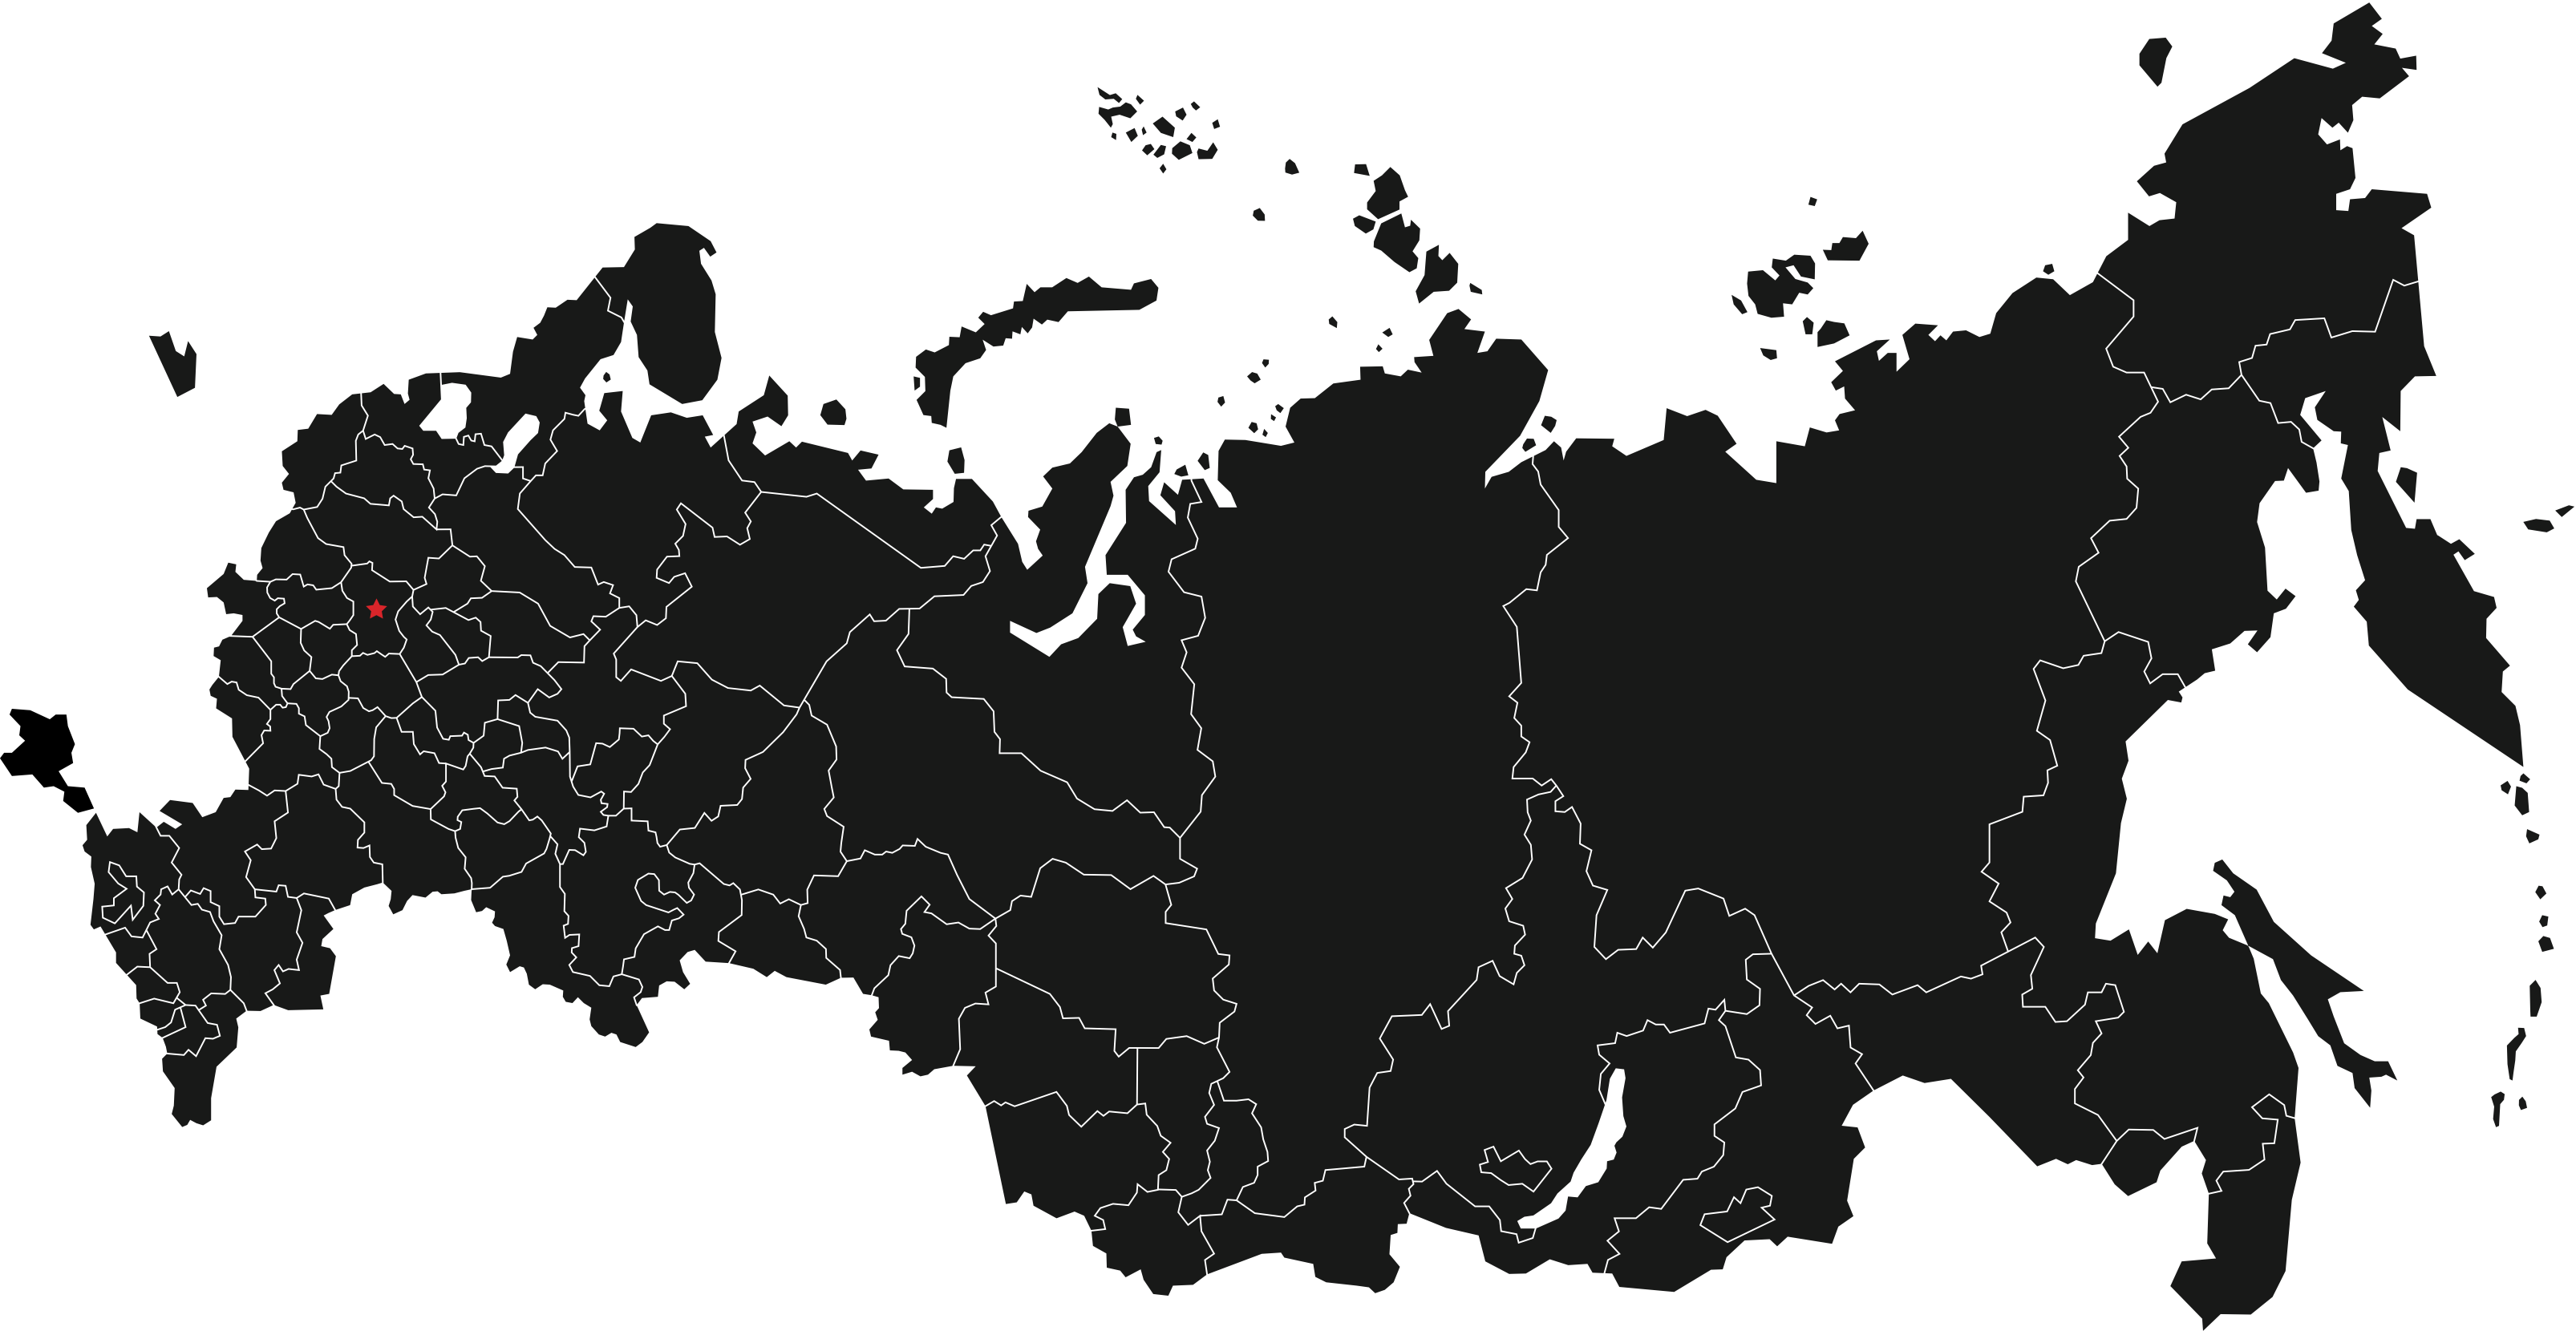 Rusya